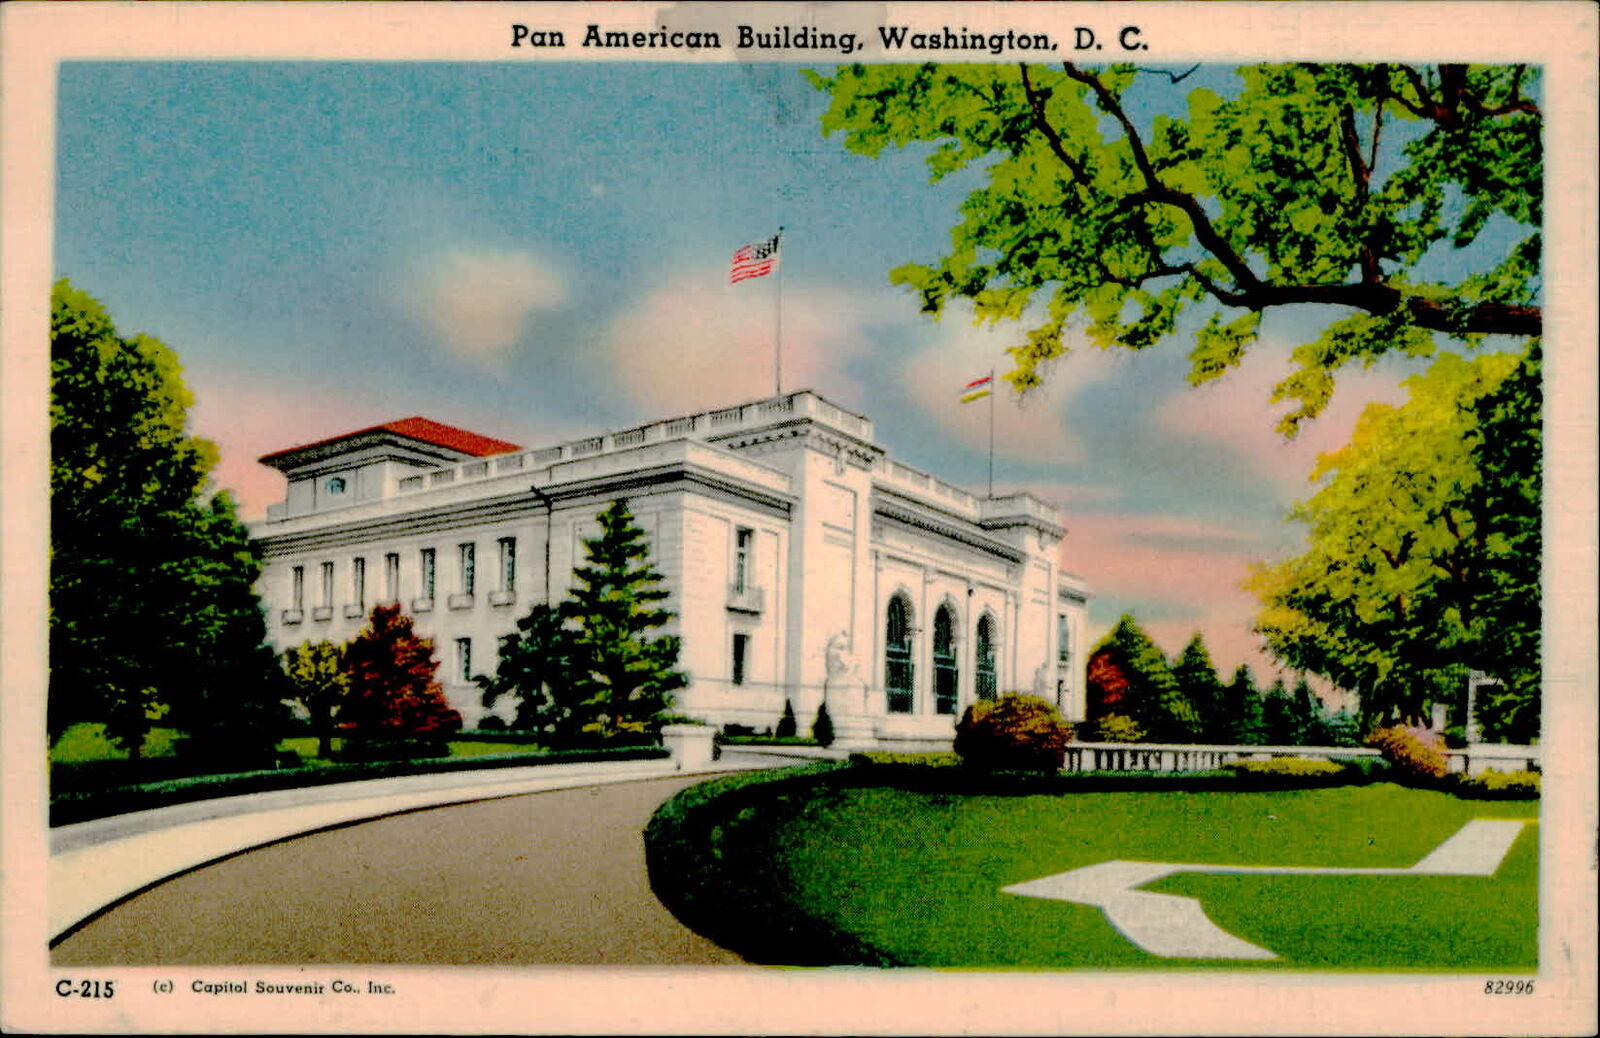 Postcard: C-215 (e) Capitol Souvenir Co., Inc. Pan American Building,